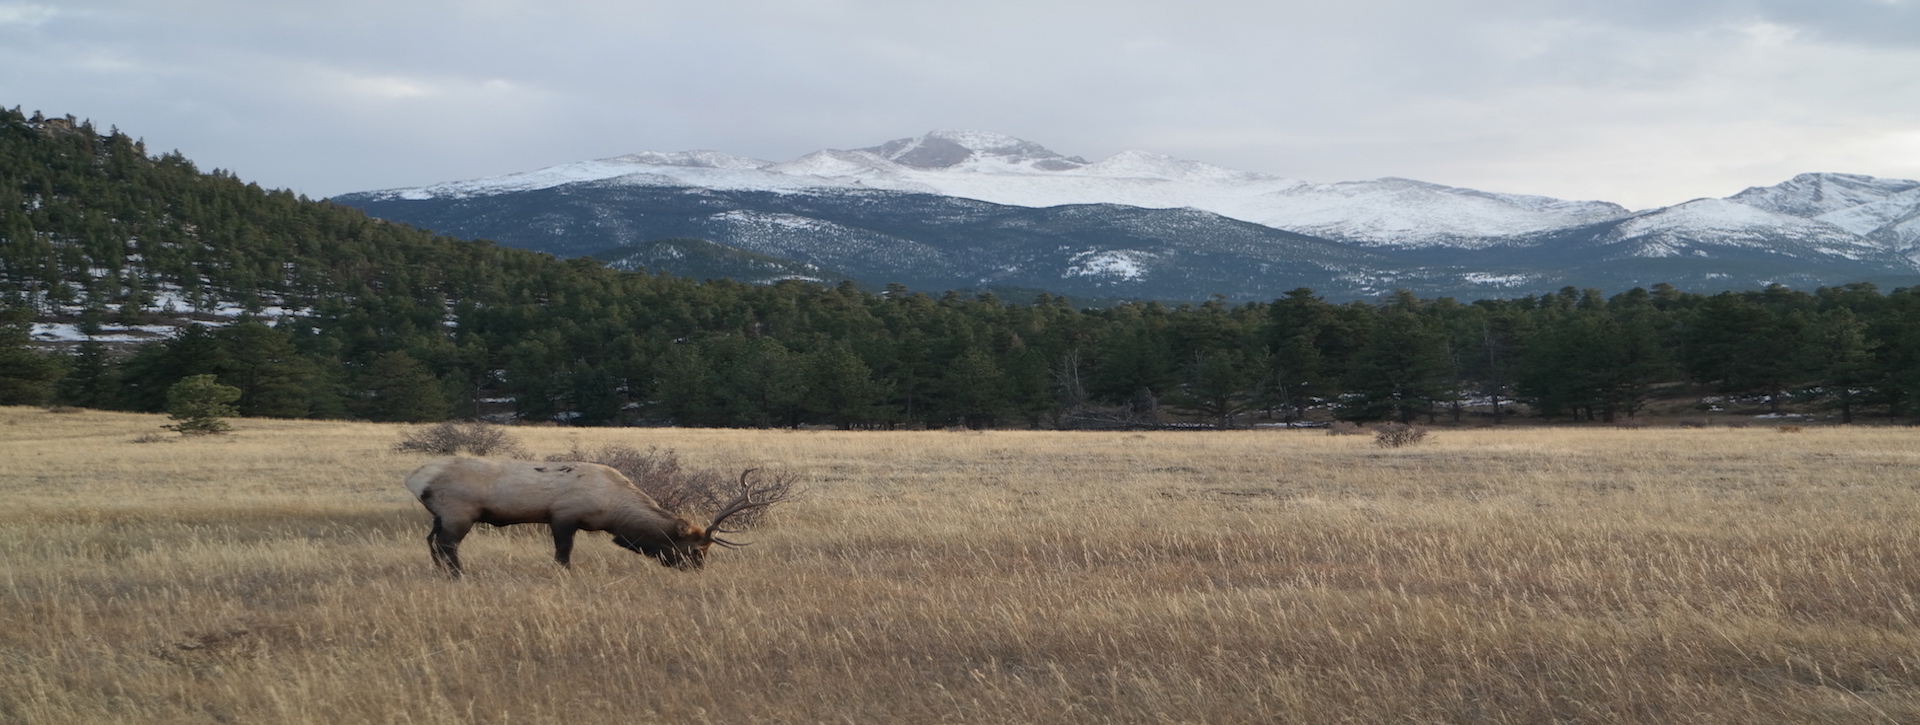 Elk in Rocky Mountain National Park, Colorado Photo by Aiden Yu